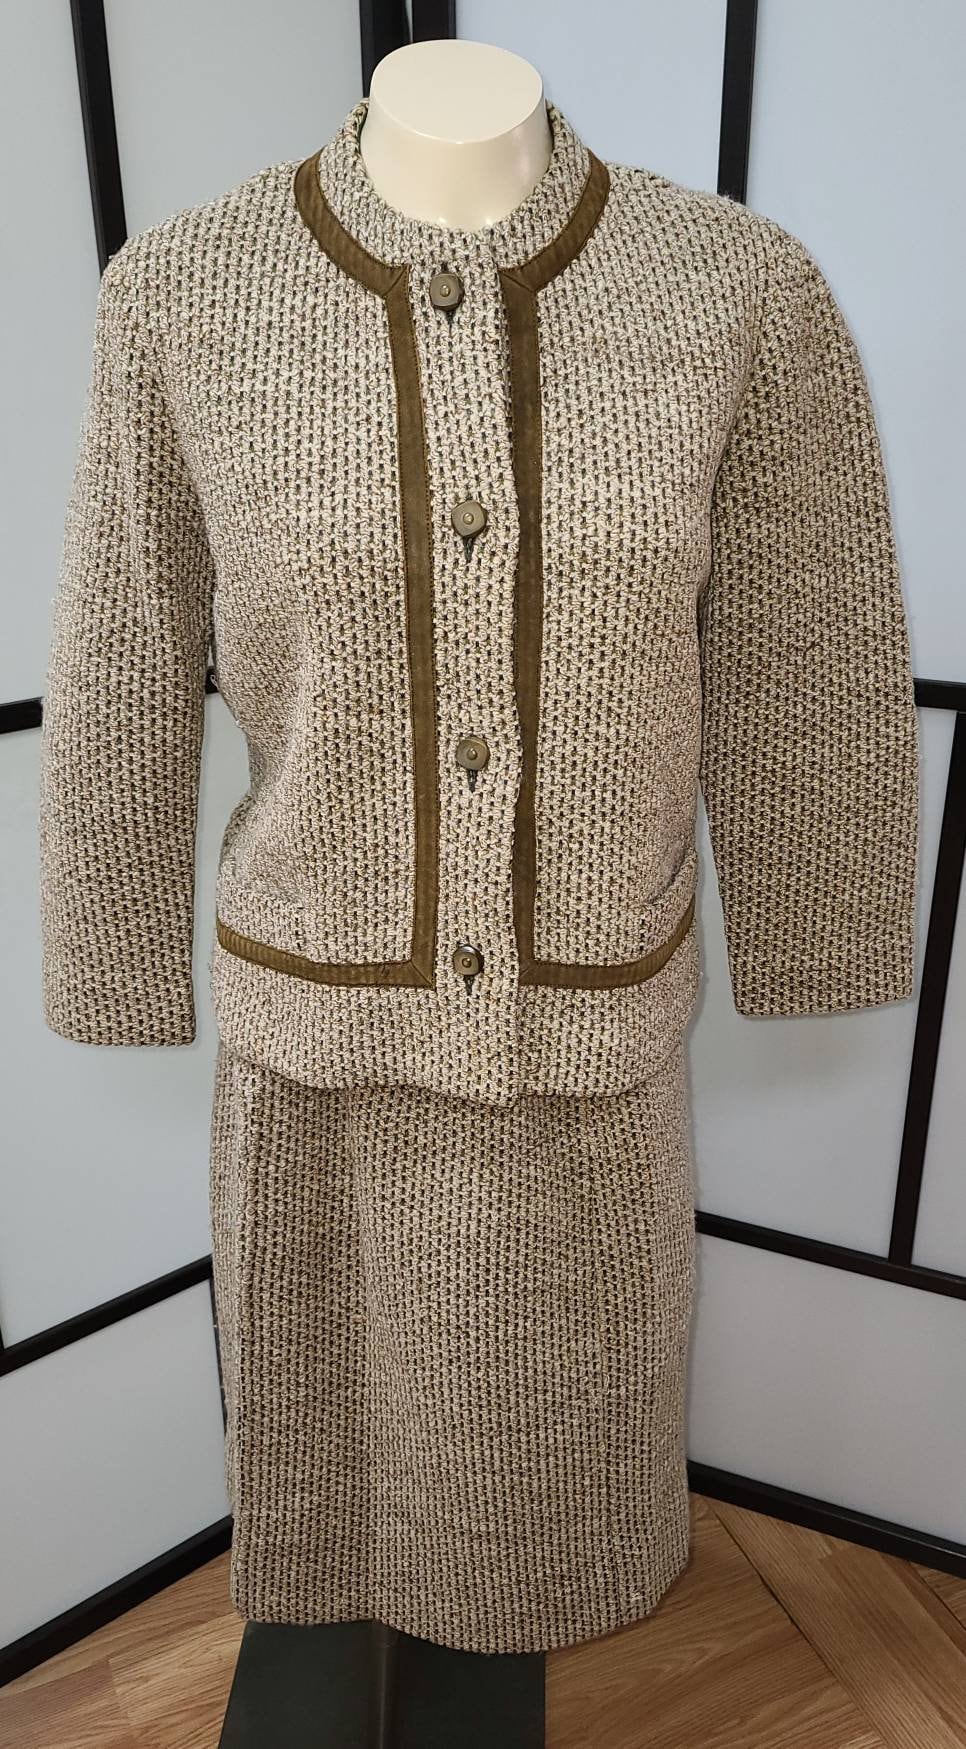 Vintage Women's Skirt Suit 1950s 60s Thick Wool Tweed Brown Beige Skirt Suit Boxy Jacket Suede Trim Mid Century Classic Rockabilly S M